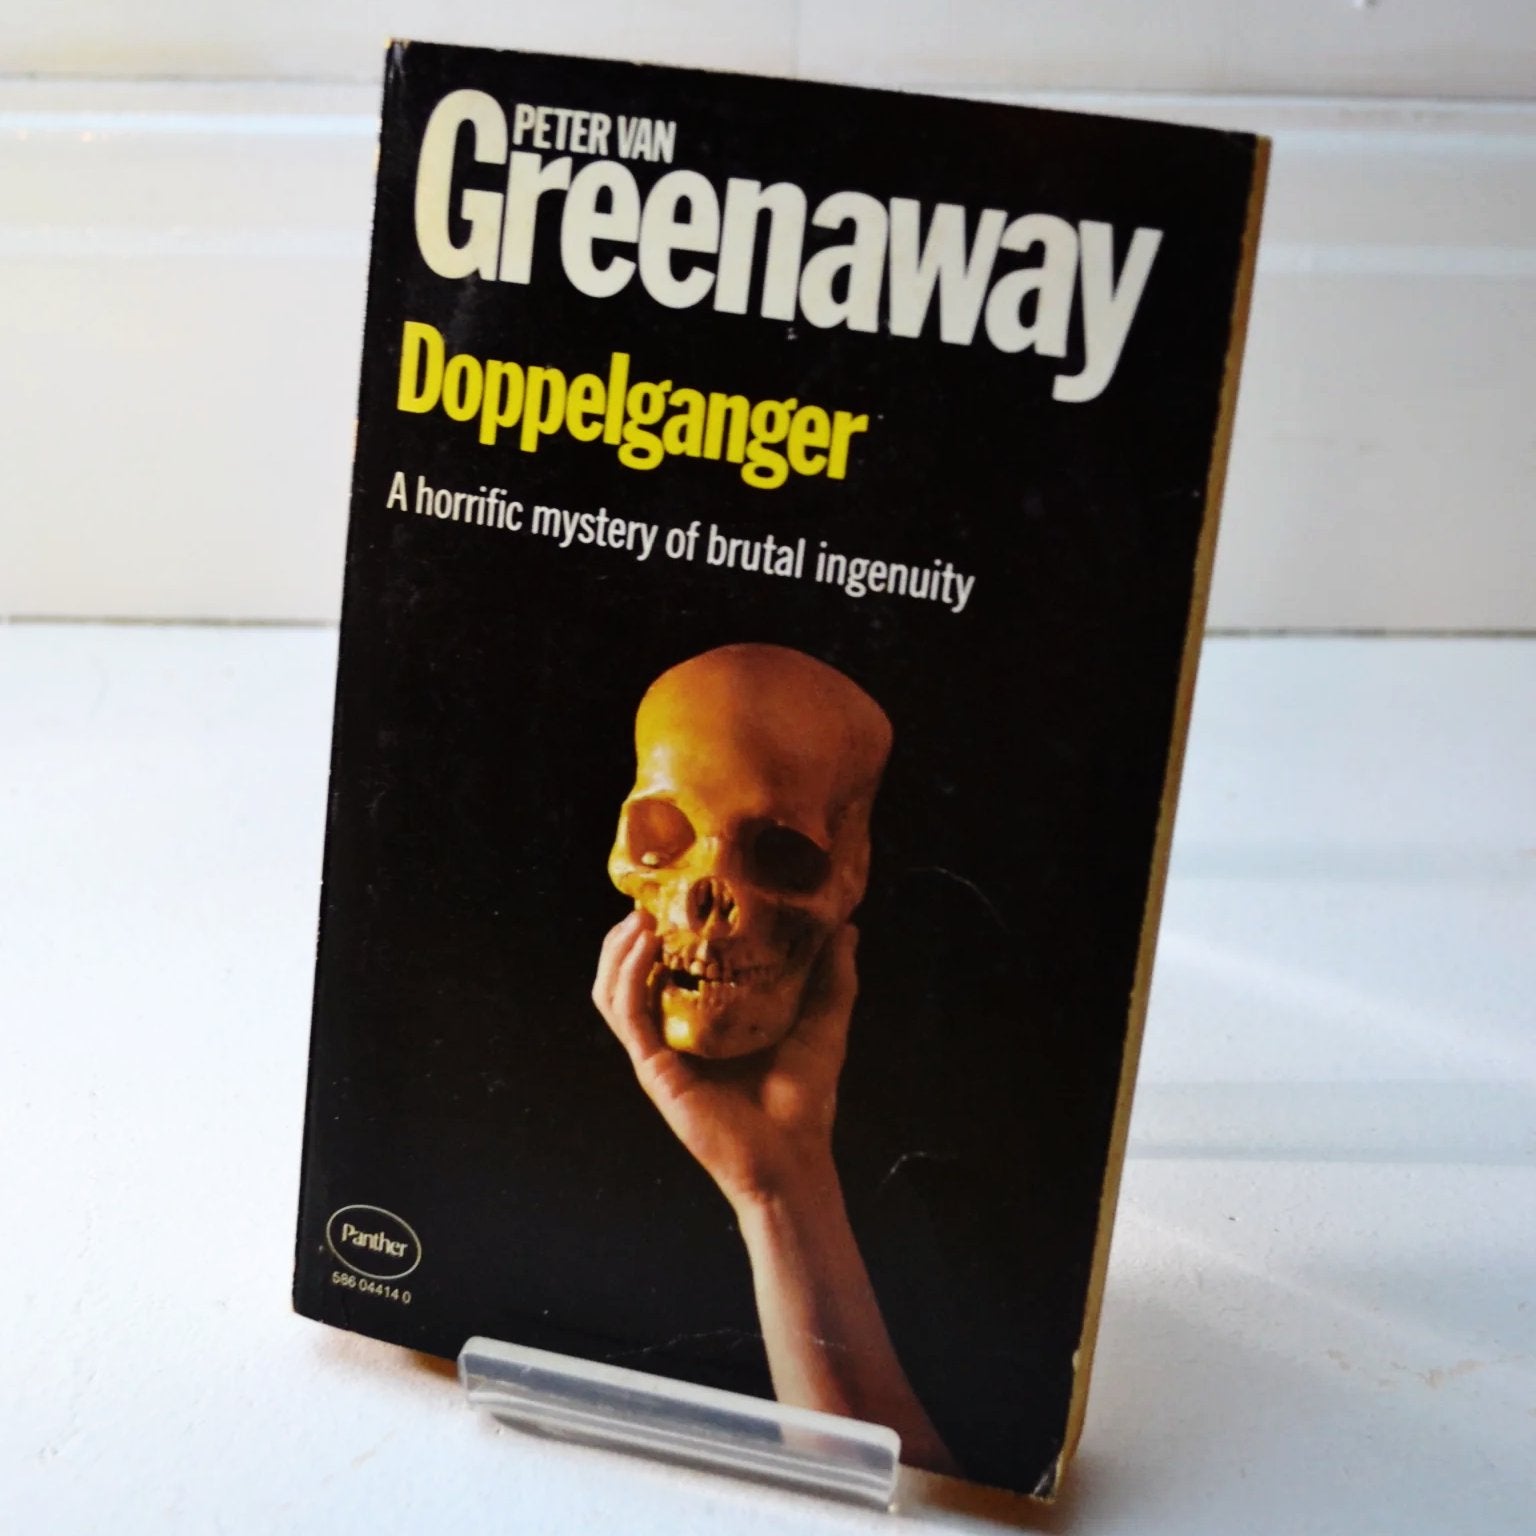 Doppelganger by Peter Van Greenaway (Panther Books / 1977)